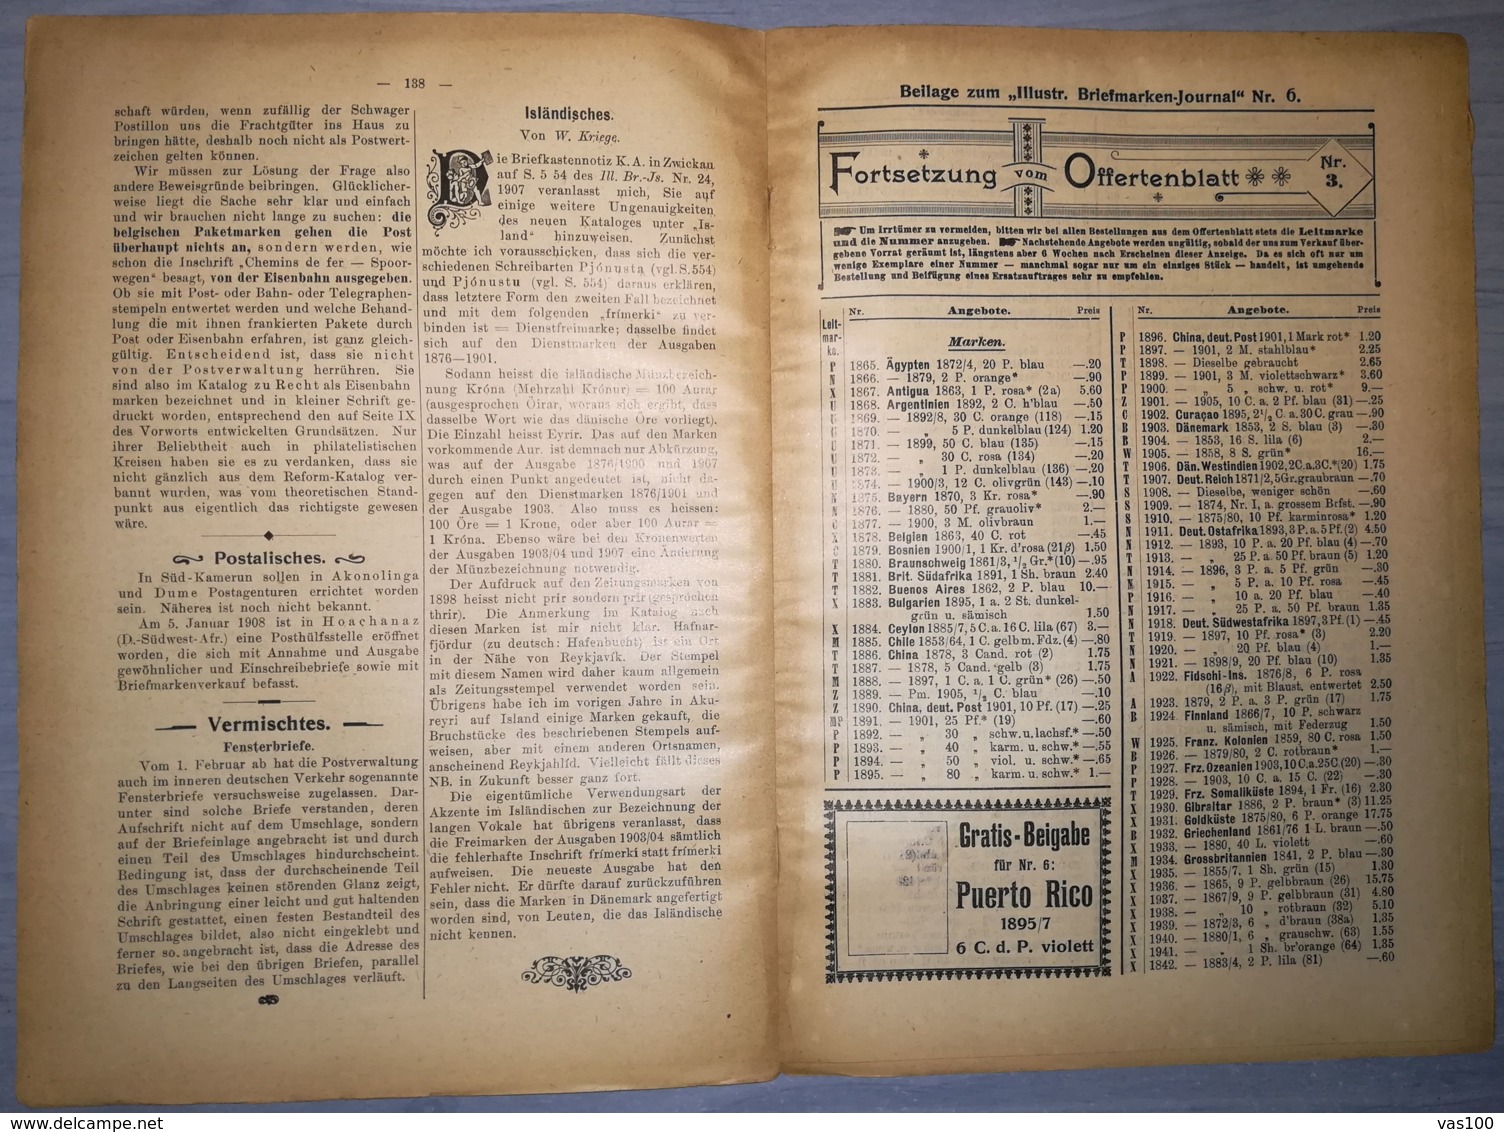 ILLUSTRATED STAMPS JOURNAL- ILLUSTRIERTES BRIEFMARKEN JOURNAL, LEIPZIG, NR 6, MARCH 1908, GERMANY - German (until 1940)